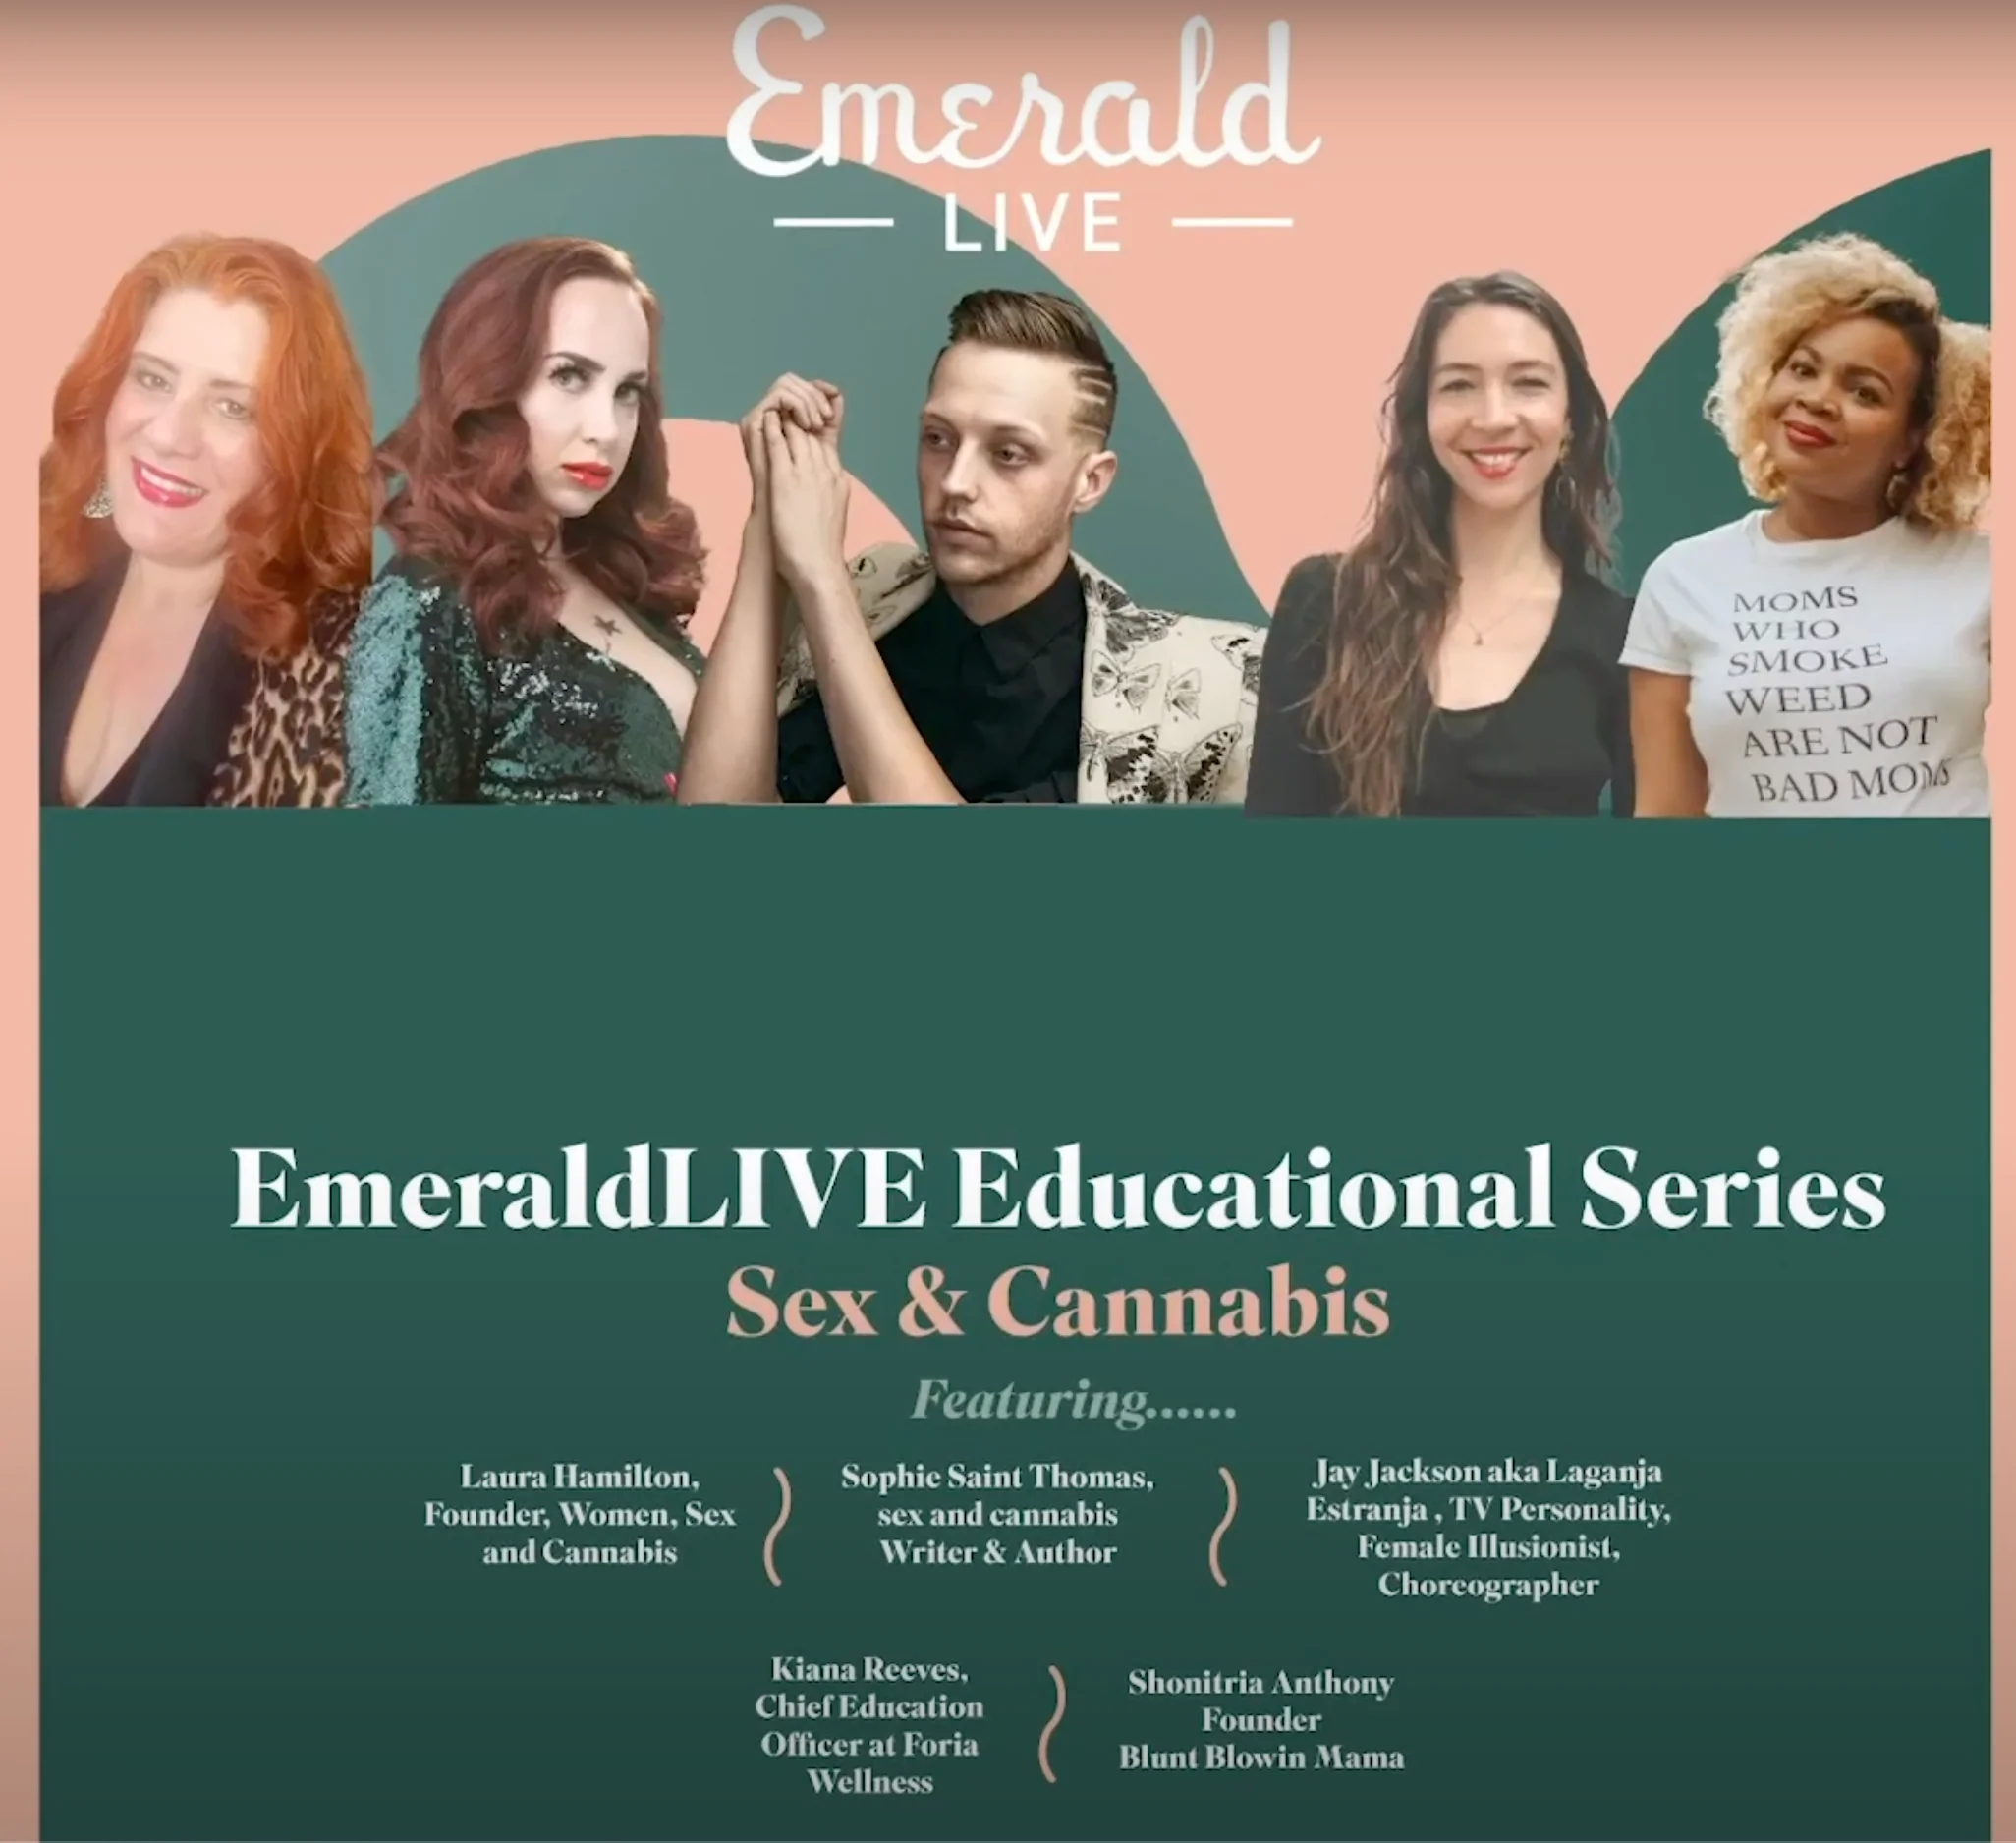 'EmeraldLIVE: Sex & Cannabis' flyer featuring Laura Hamilton, Sophie Saint Thomas, Jay Jackson aka Laganja, Kiana Reeves, and Shonitra Anthony